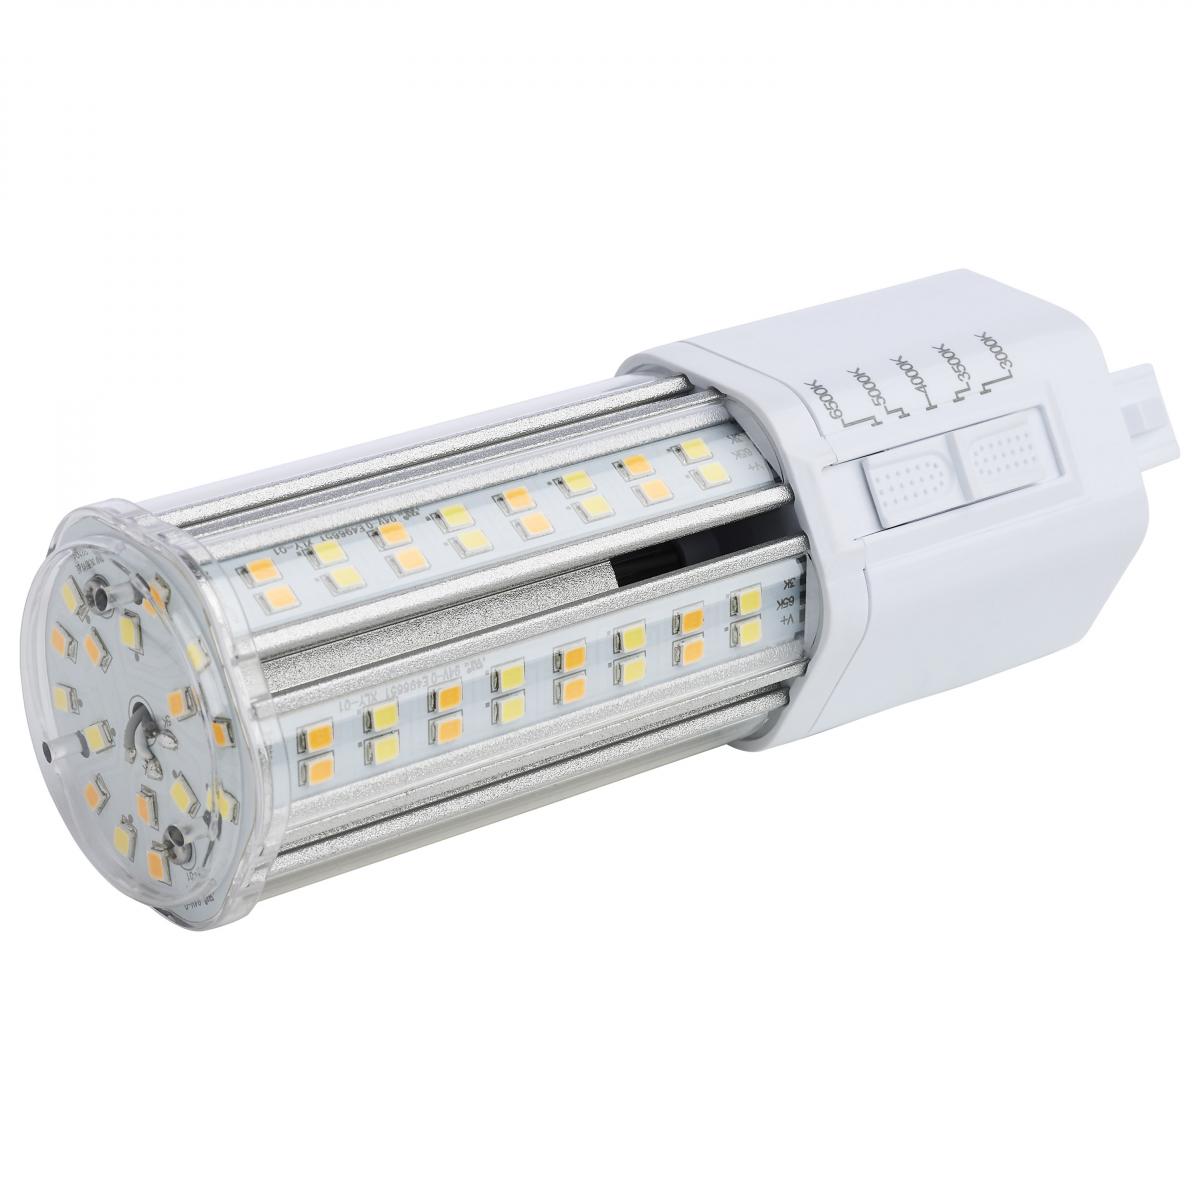 2 pin PL LED Bulb, 22 Watt, 2860 Lumens, Selectable CCT 3000K to 6500K, Universal, Replaces 42W CFL, G24d Base, Type B Ballast Bypass